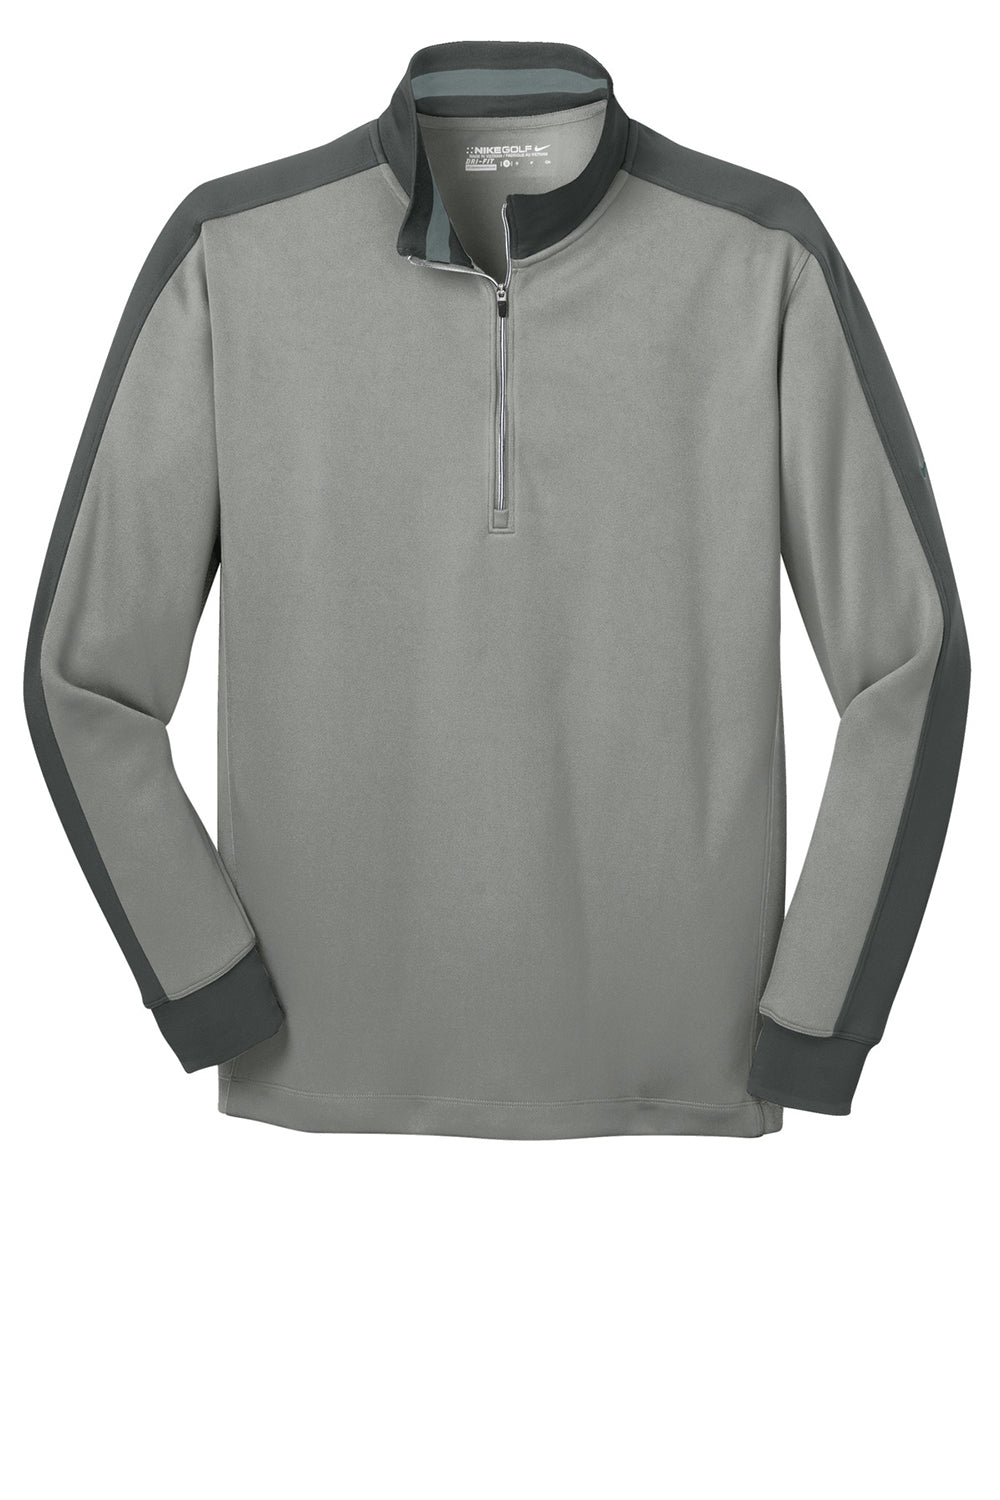 Nike 578673 Mens Dri-Fit Moisture Wicking 1/4 Zip Sweatshirt Heather Grey/Dark Grey Flat Front